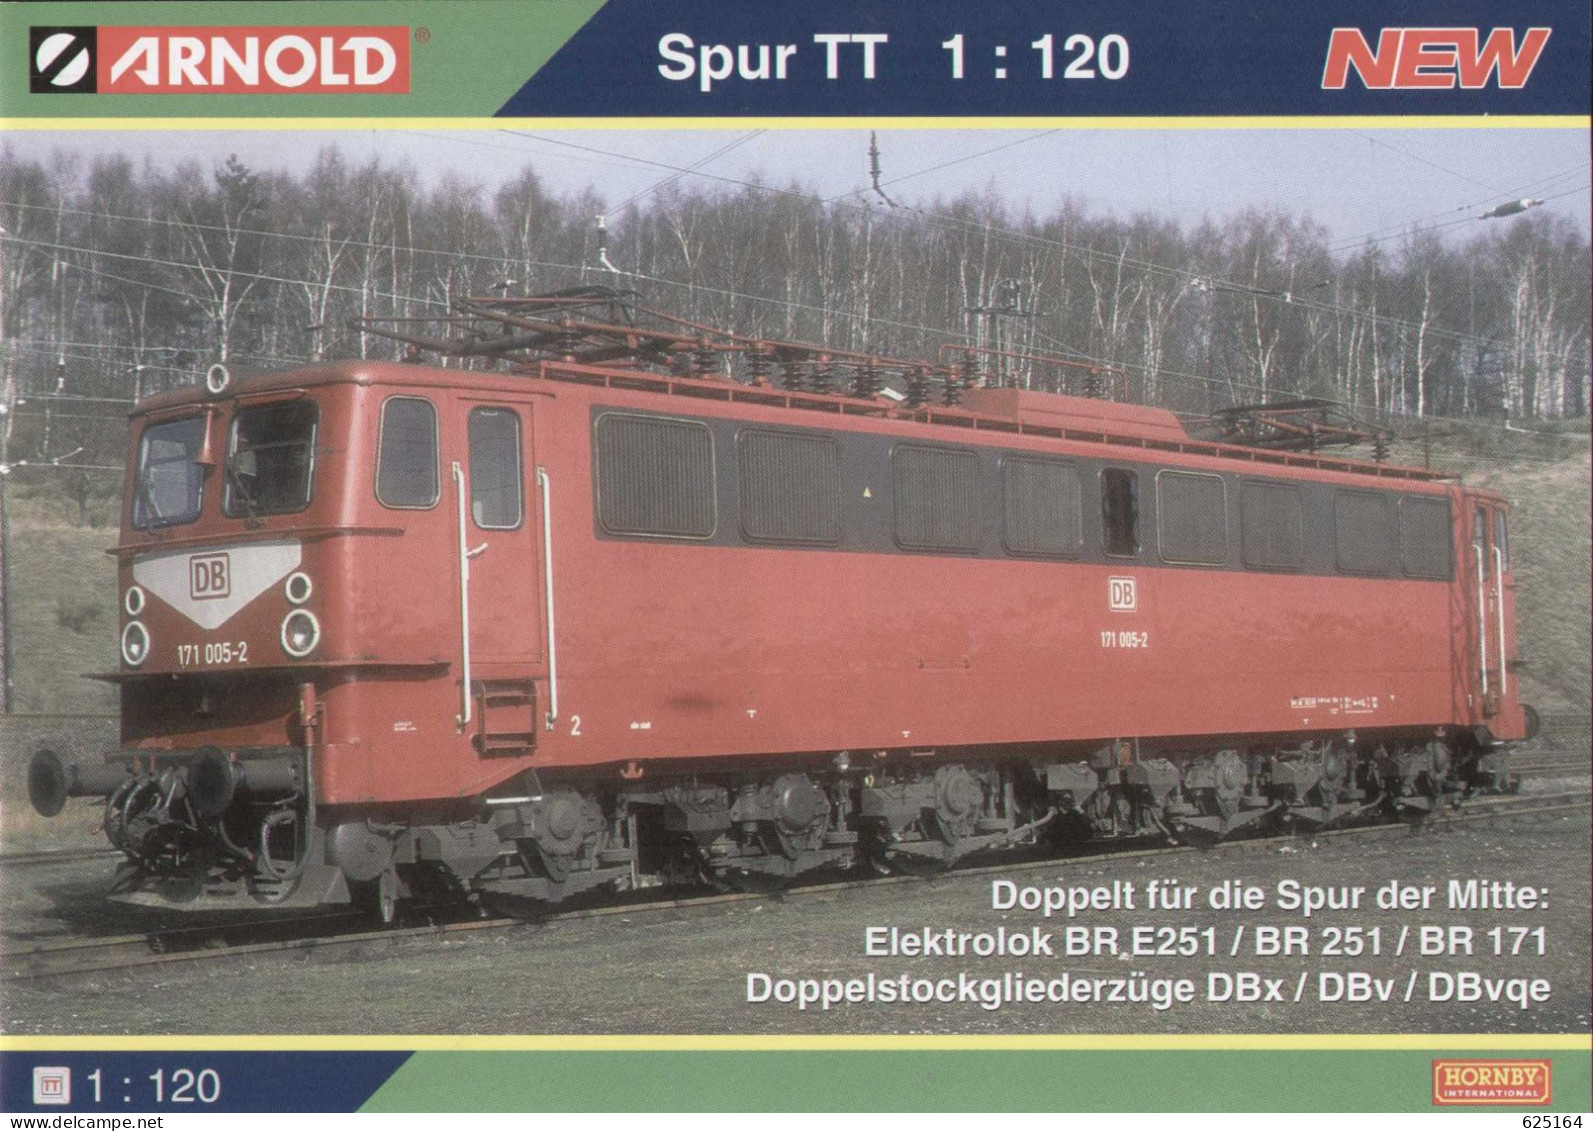 Catalogue ARNOLD Neuheiten 2014 Spur TT 1/120 (Hornby) - Alemania